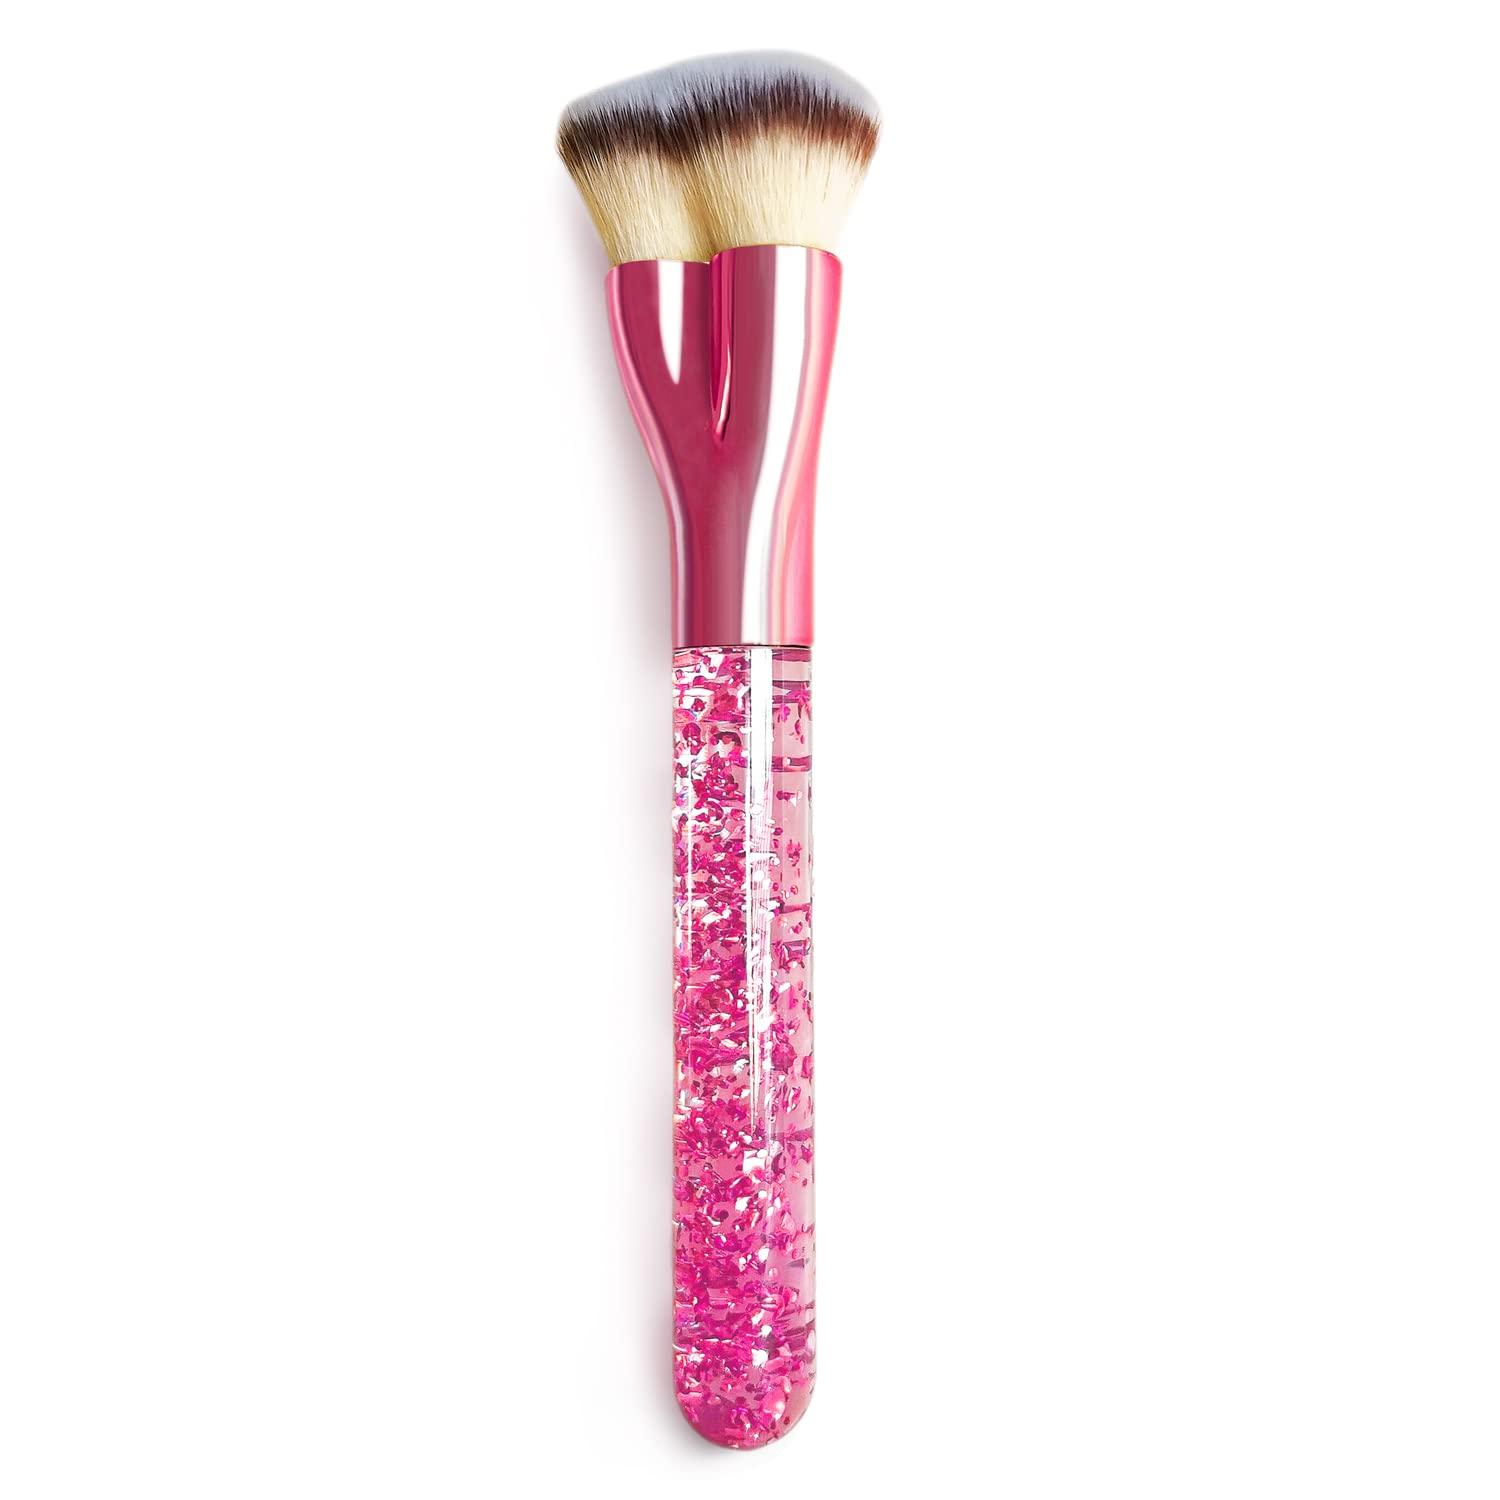 Foundation Brush Heart Pink – Lamora Beauty